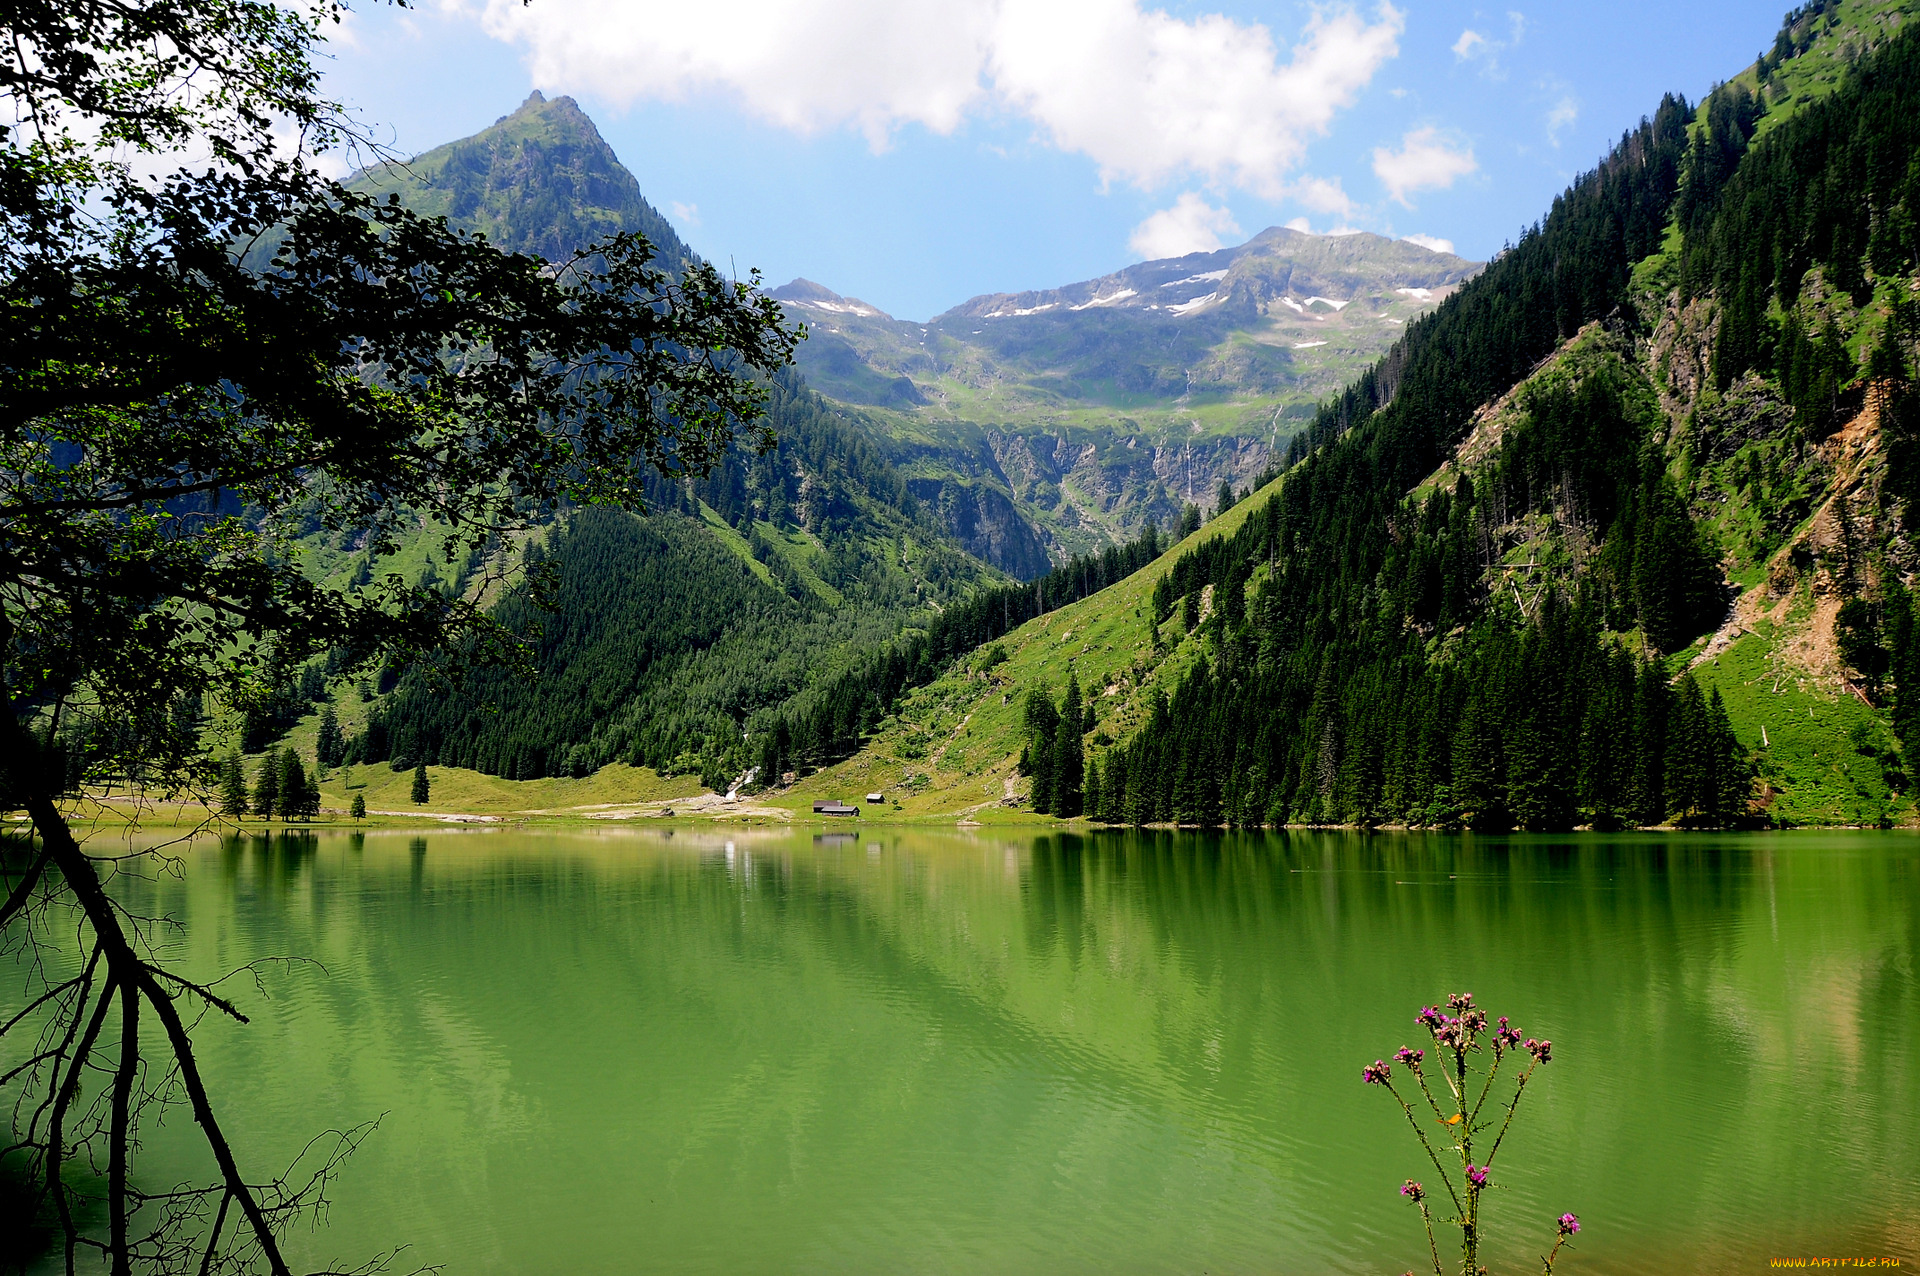 schwarzensee, austria, природа, реки, озера, озеро, леса, горы, зелень